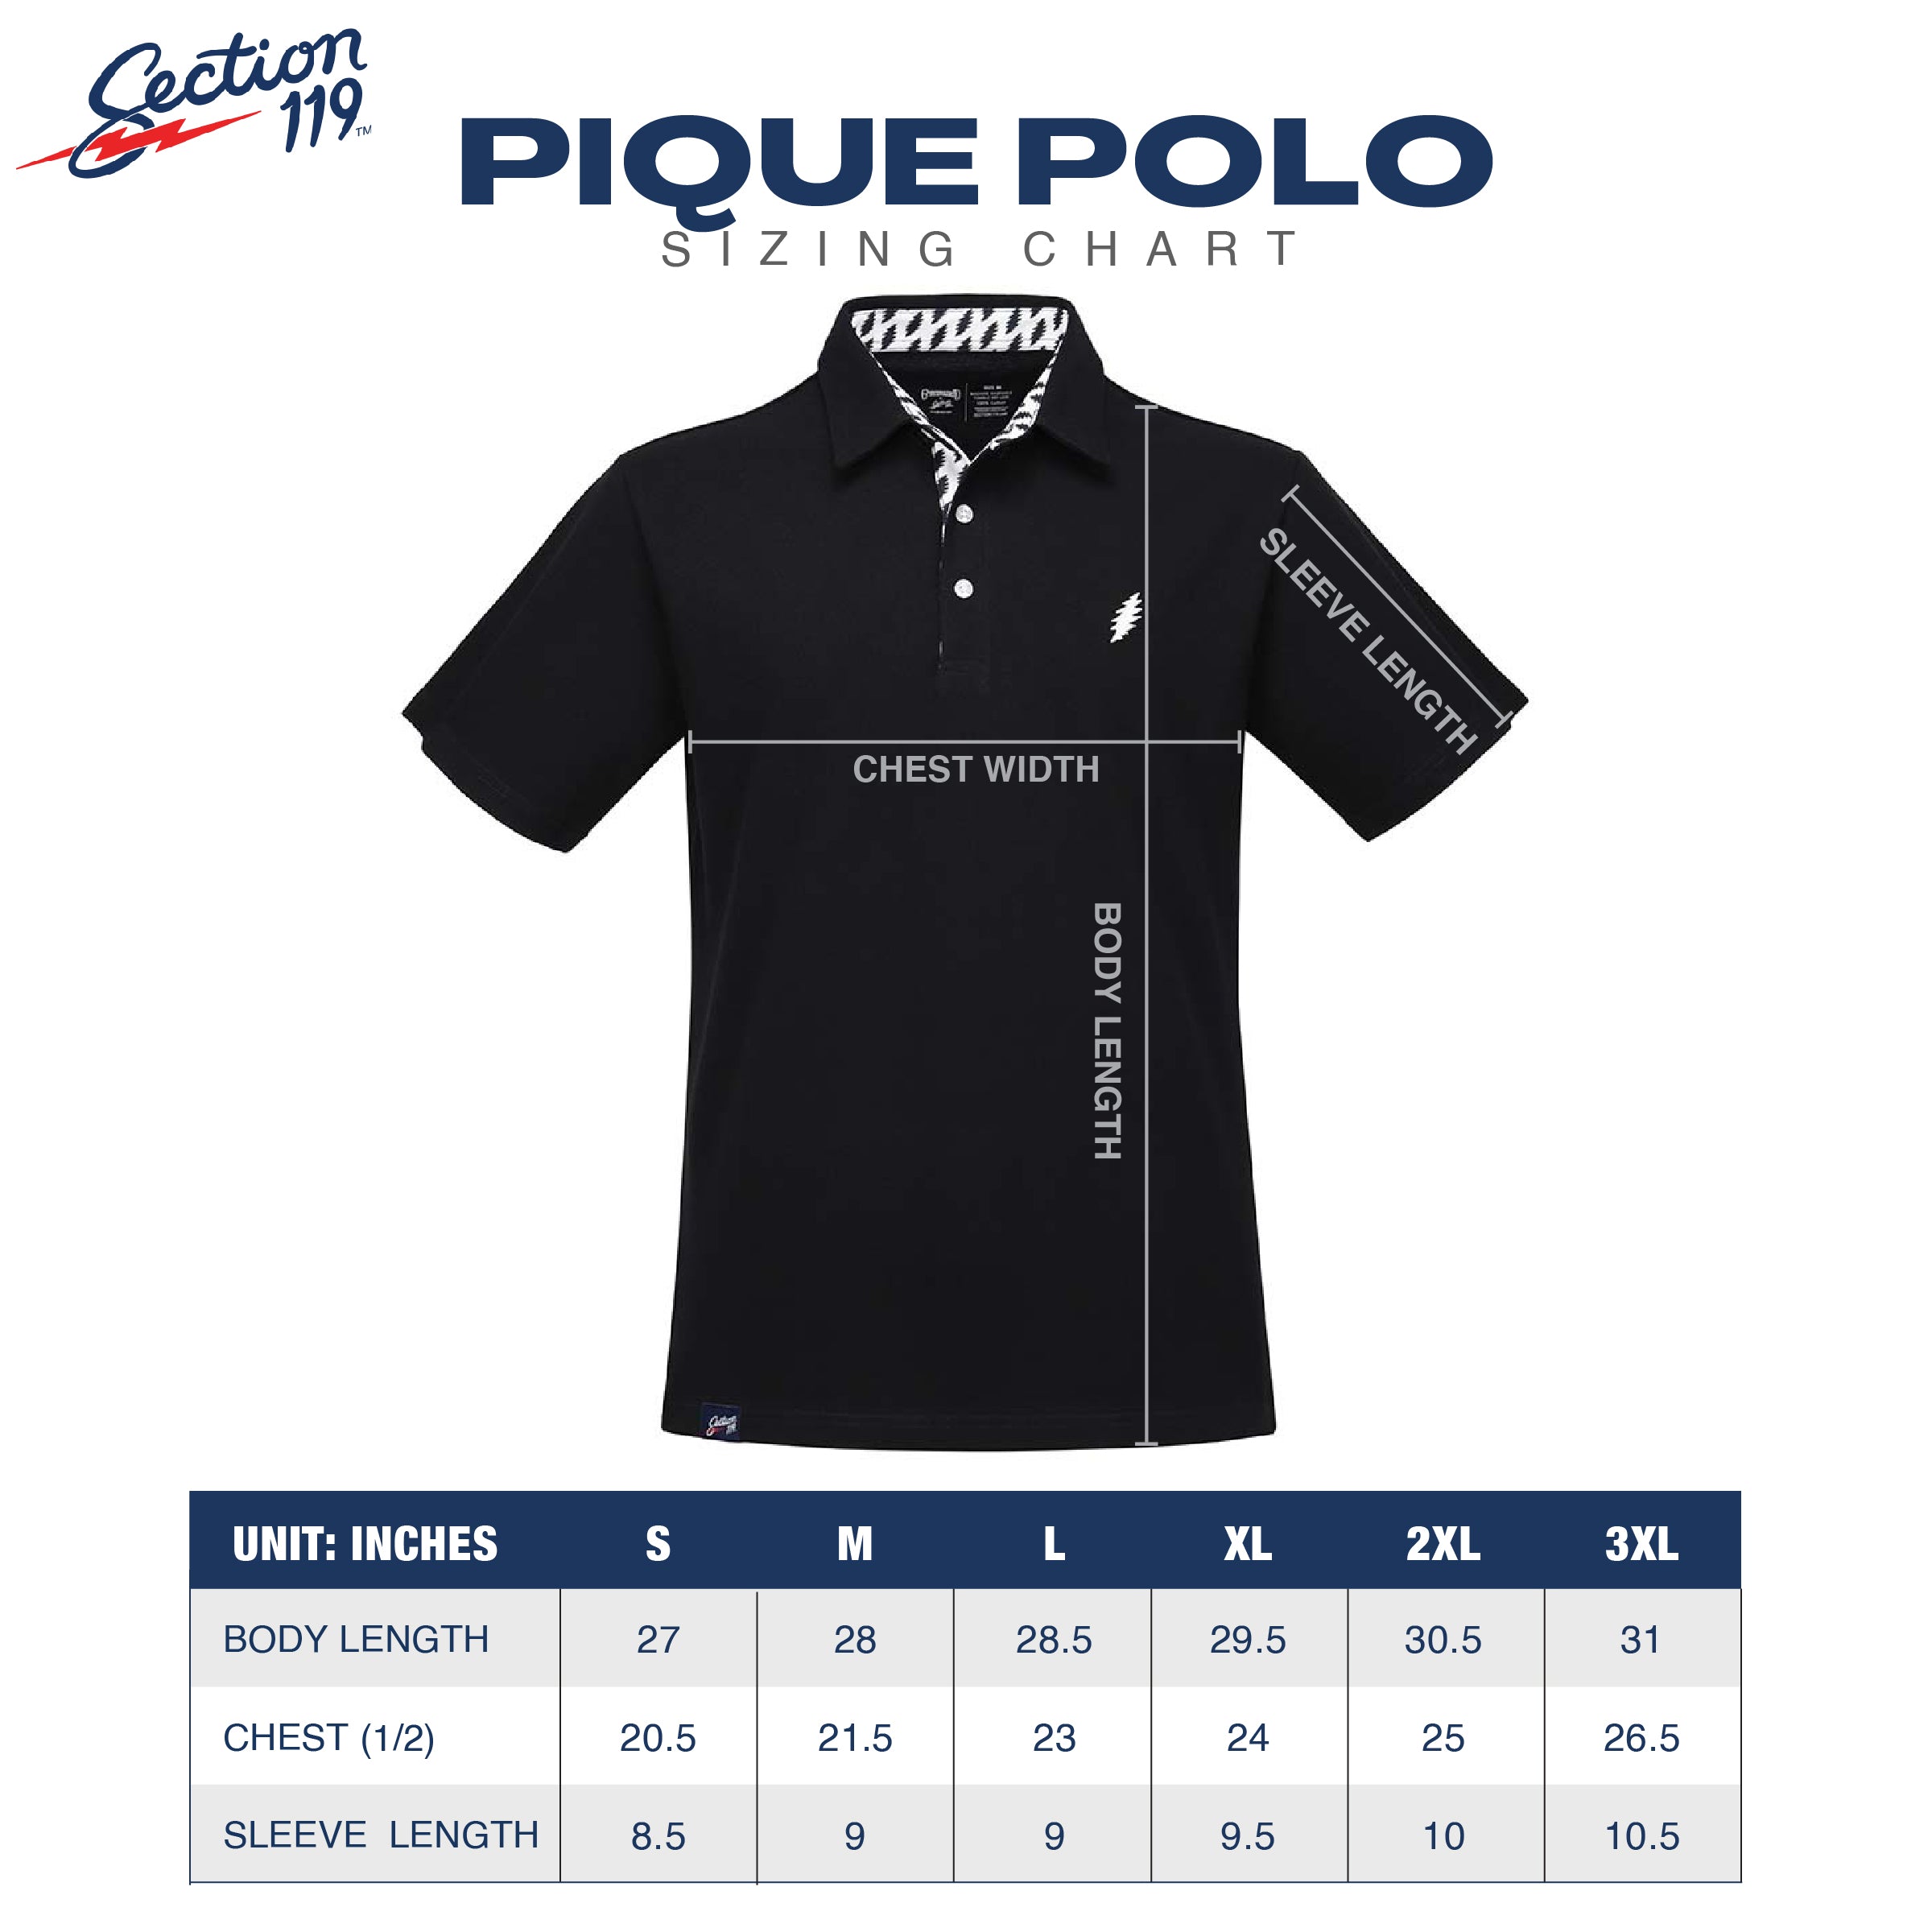 GD Pique Polo Navy Bolts - Section 119